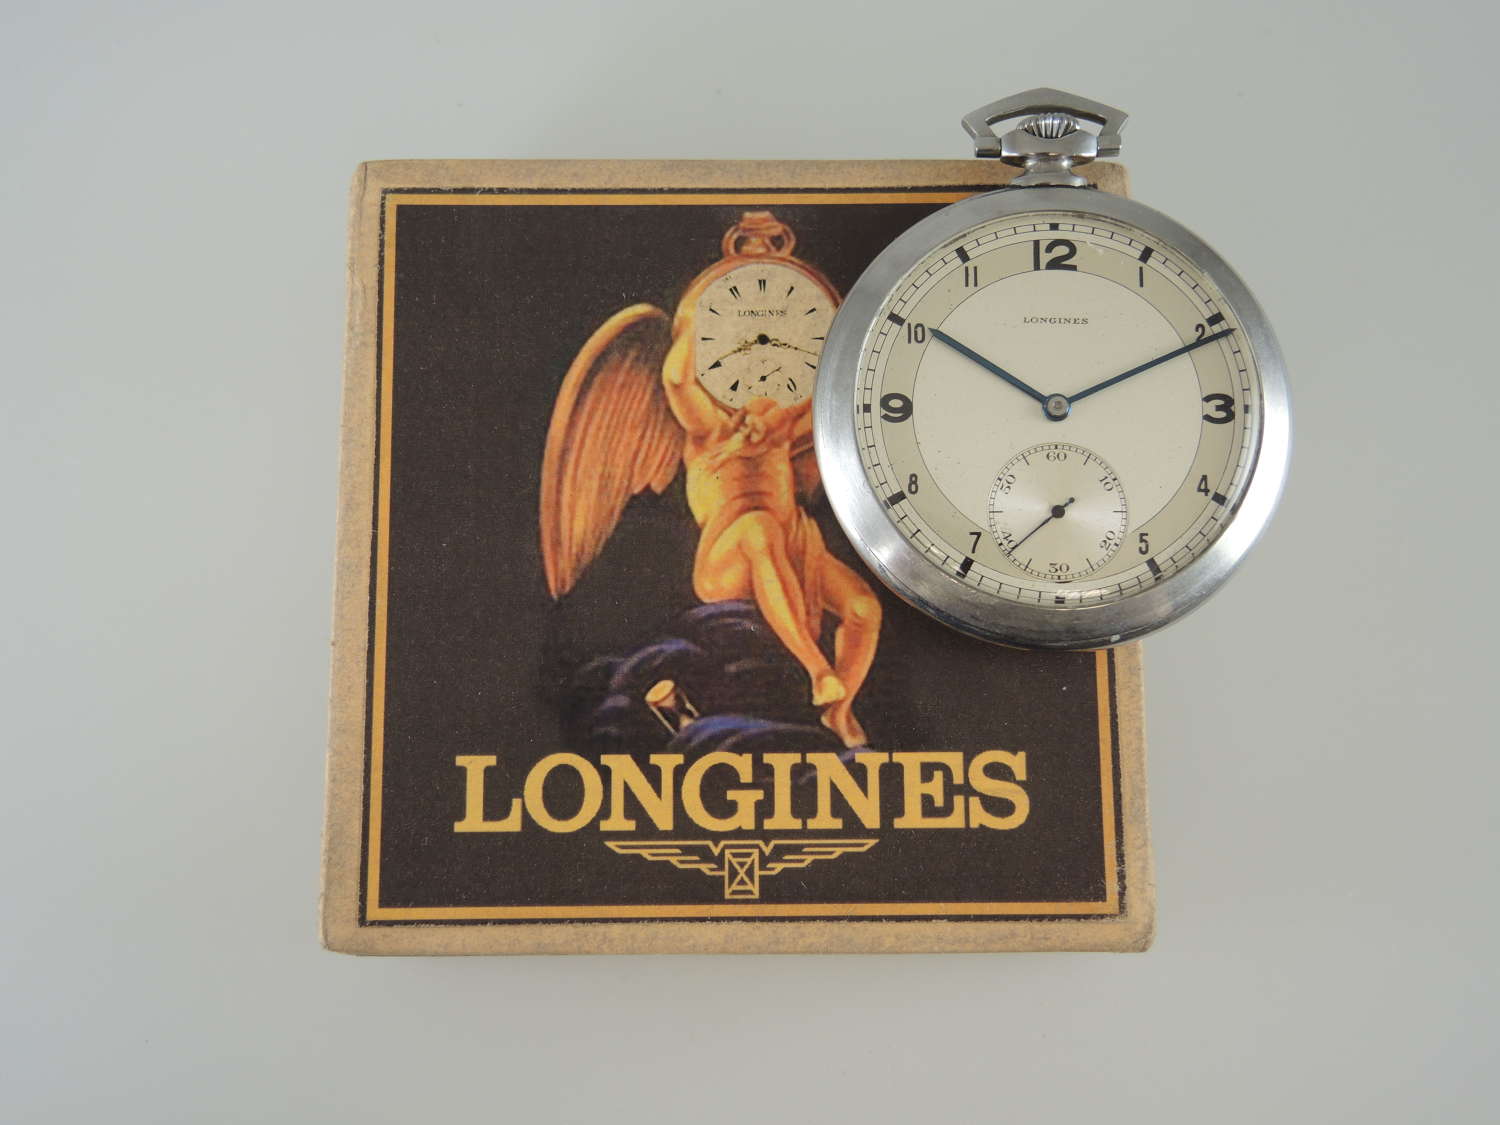 Vintage Longines pocket watch with box c1930